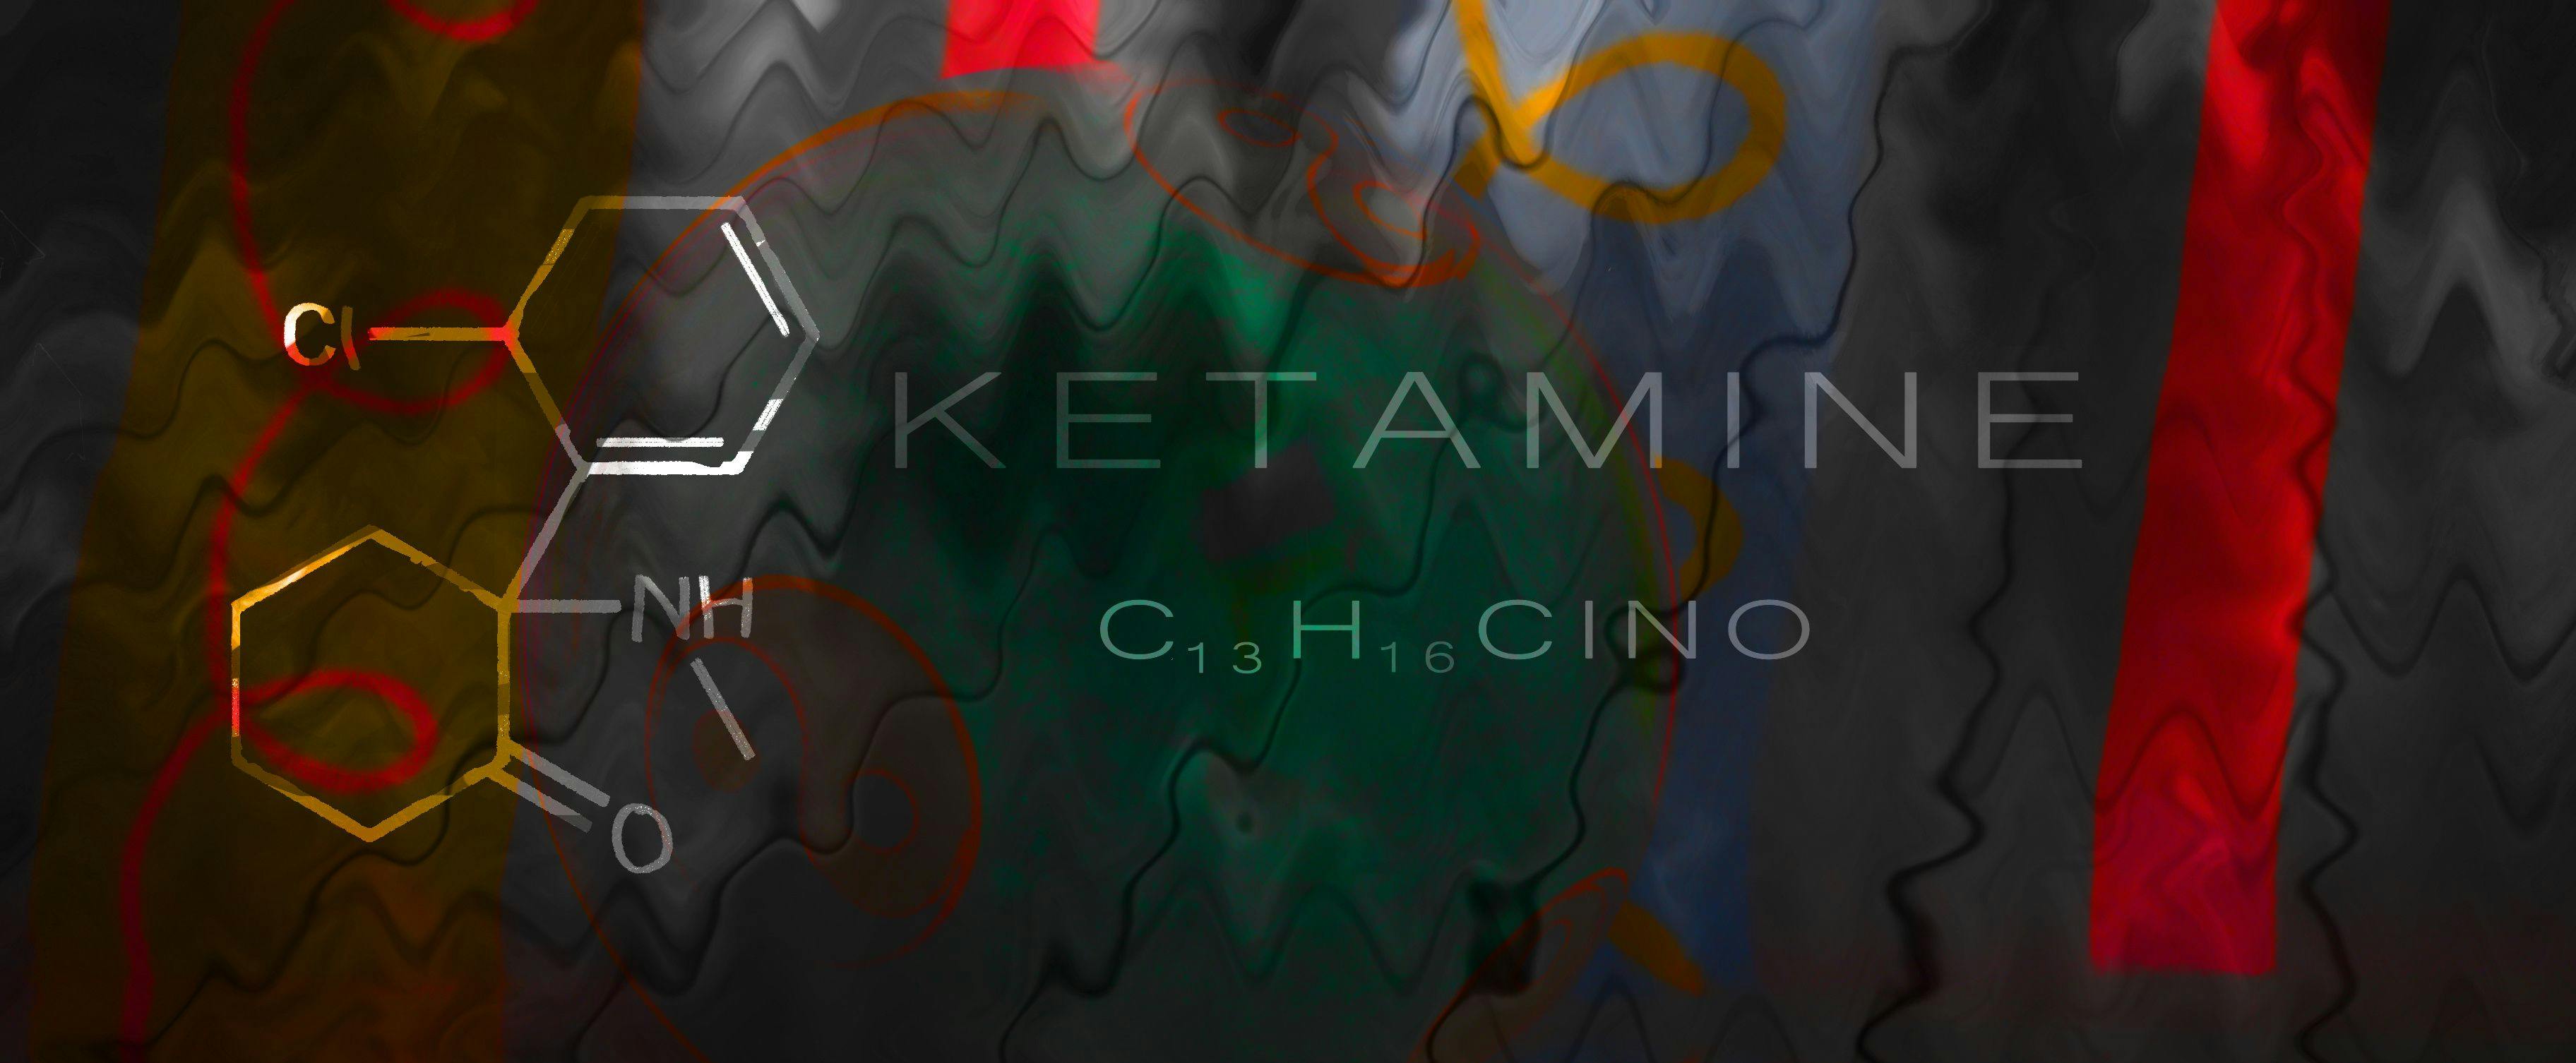 Ketamine illustration with the chemical formula | Image credit: ©maaramore stock.adobe.com